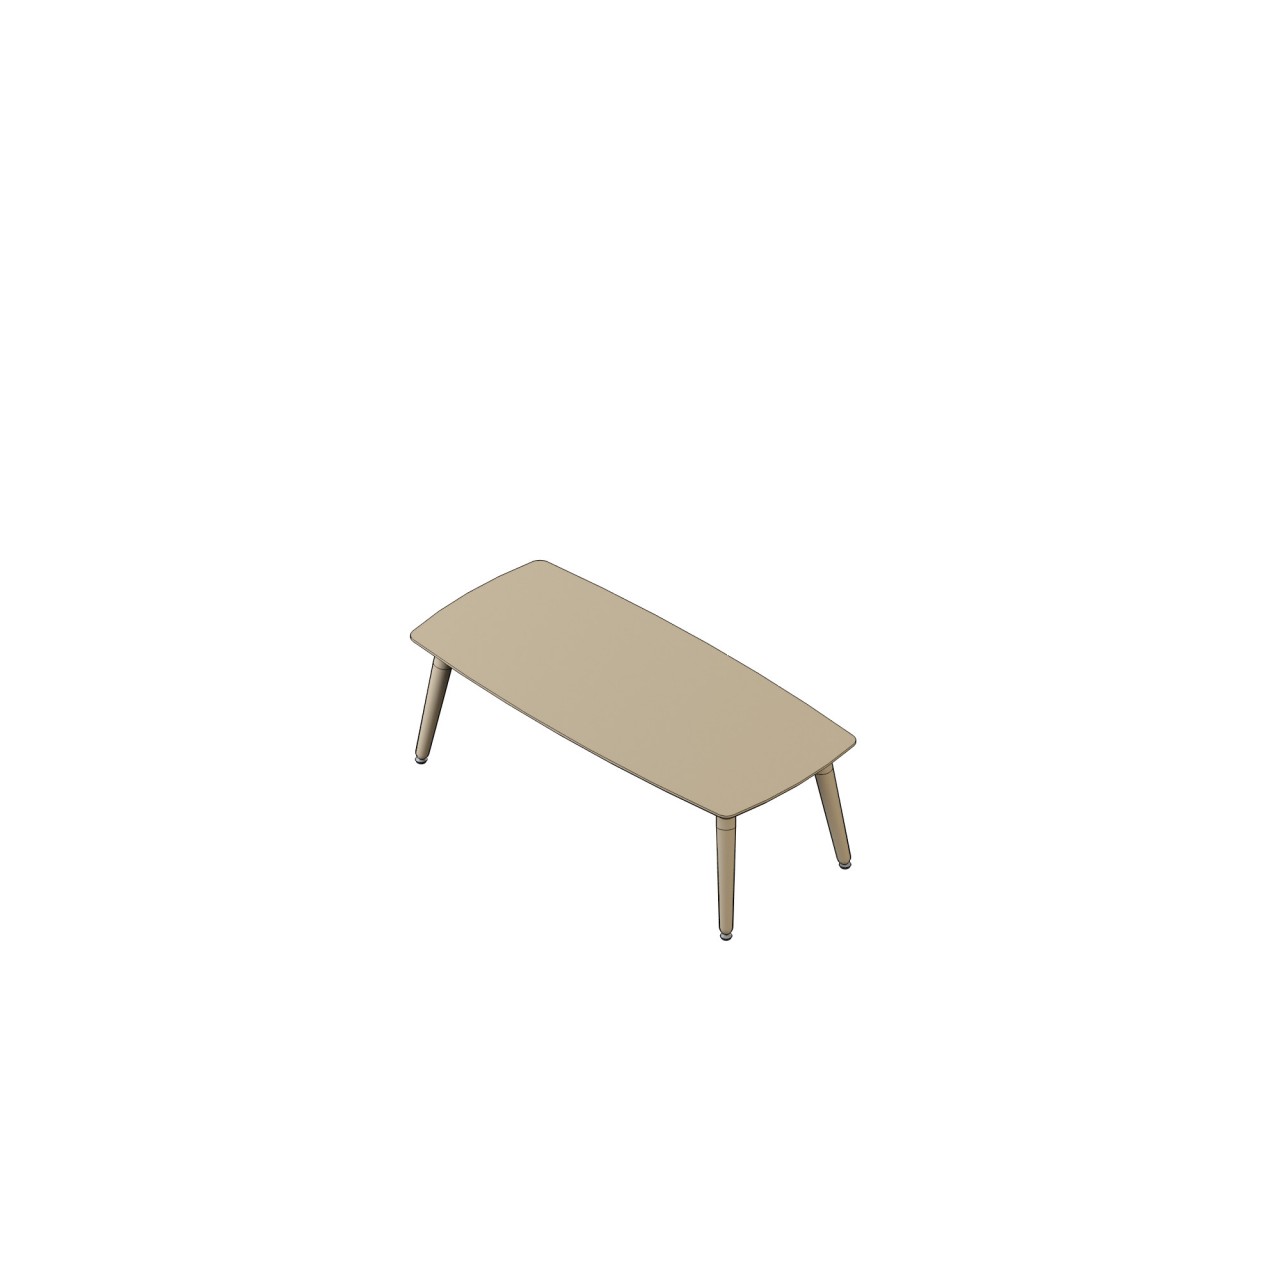 madmen tables - MM-7
coffee table, square,
convex perimeter